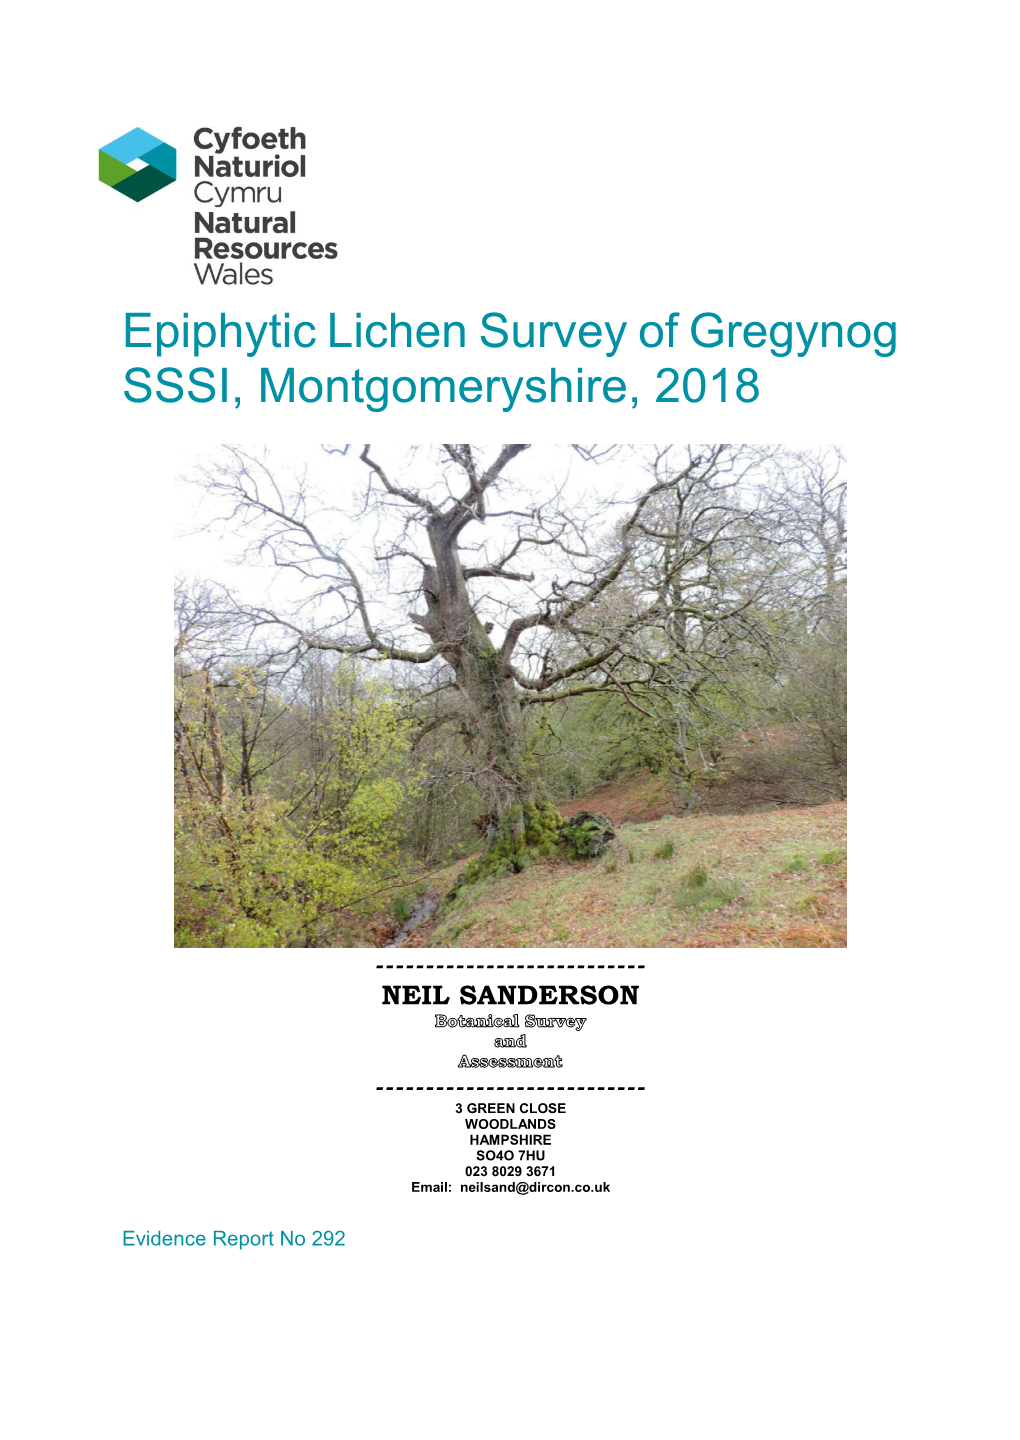 Epiphytic Lichen Survey of Gregynog SSSI, Montgomeryshire, 2018